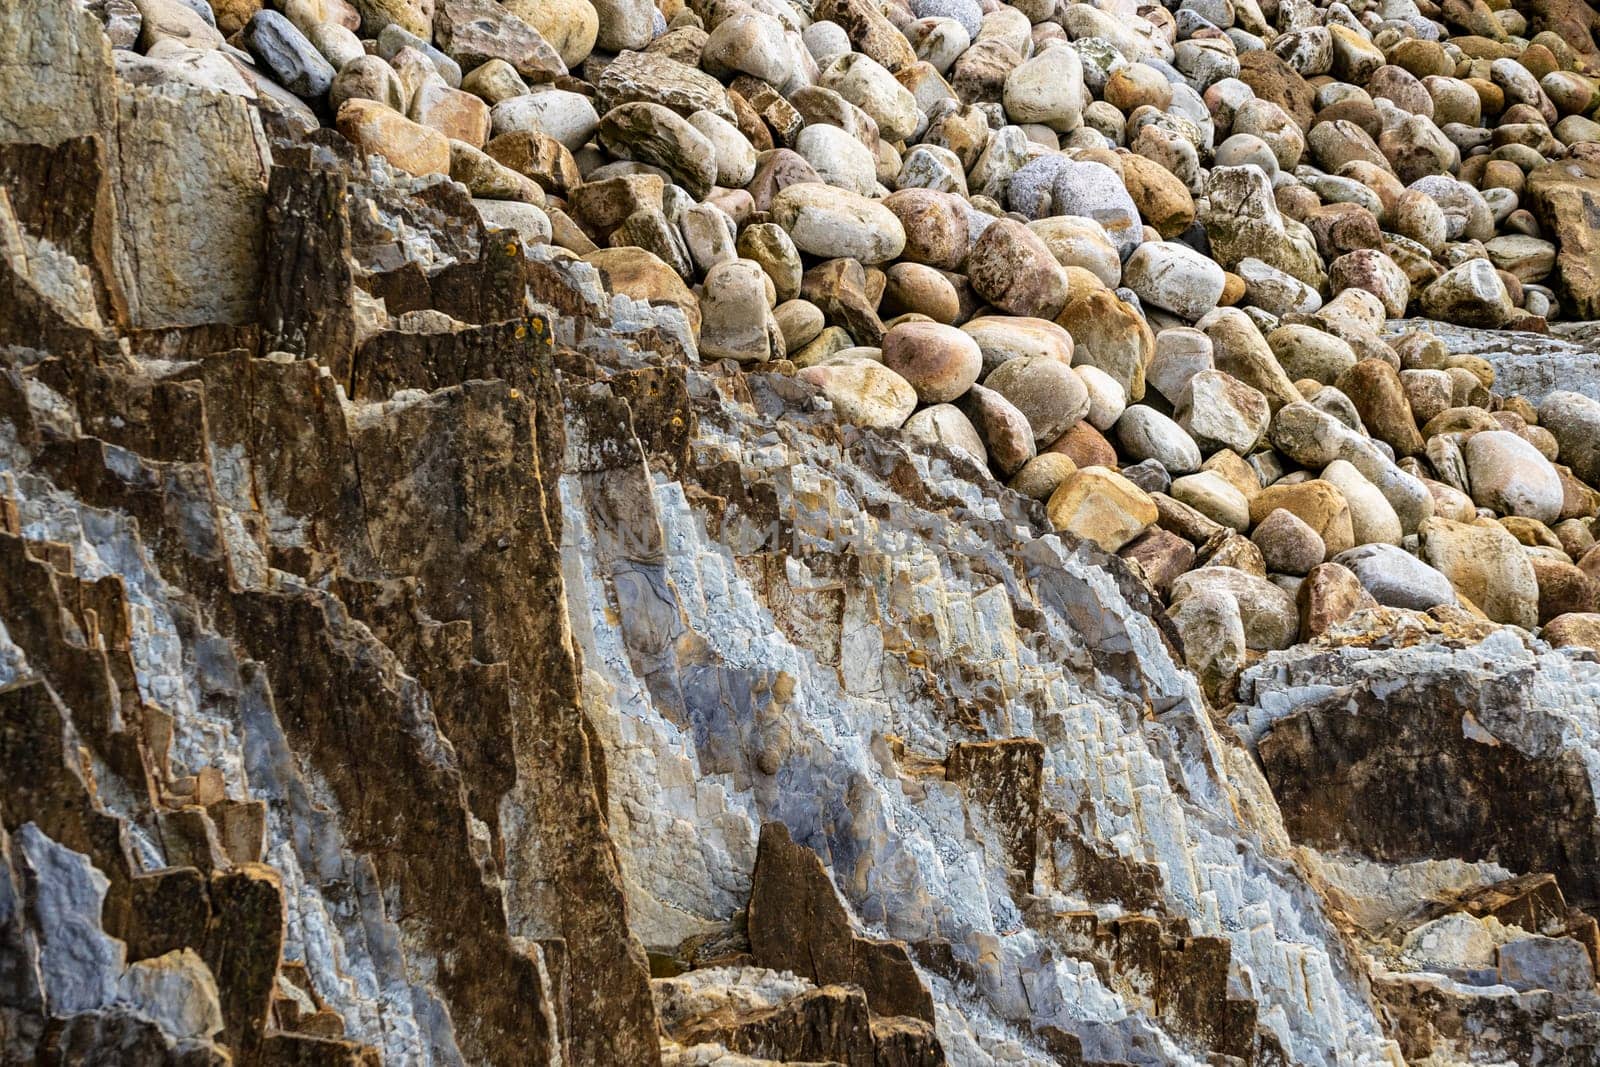 Pebbles and boulders on the seashore. Rocky ocean shore